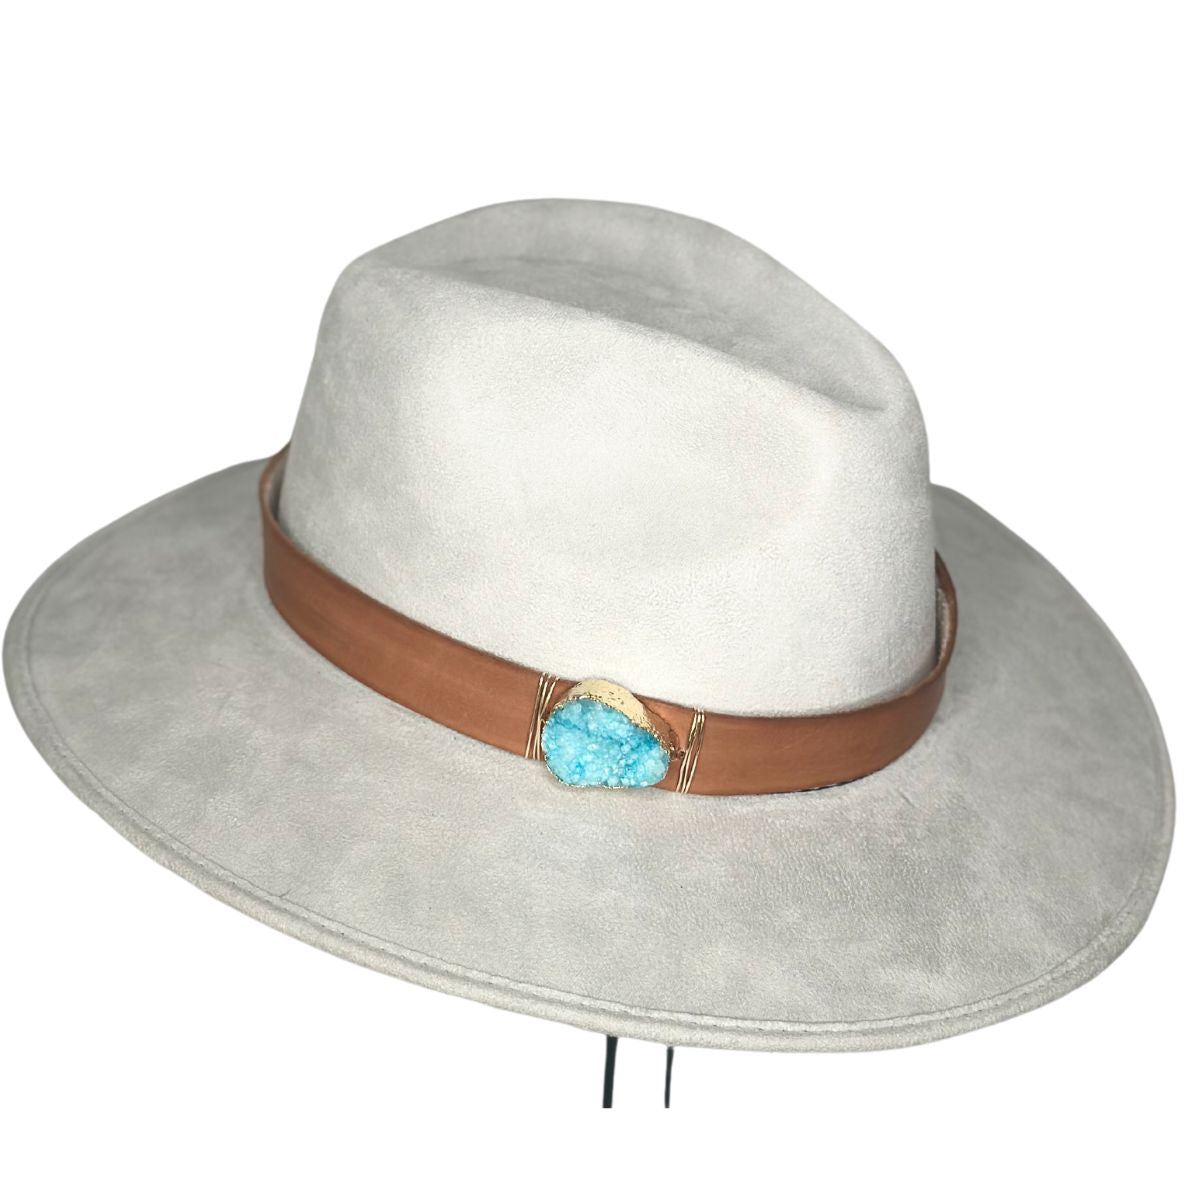  Women Cowboy Hatband, Rhinestone Silver Hat Belt, Bling Hat  Accessories, Fedora Hat Jewelry, Adjustable Hat Belt, Western Style Hat  band (Silver) : Handmade Products